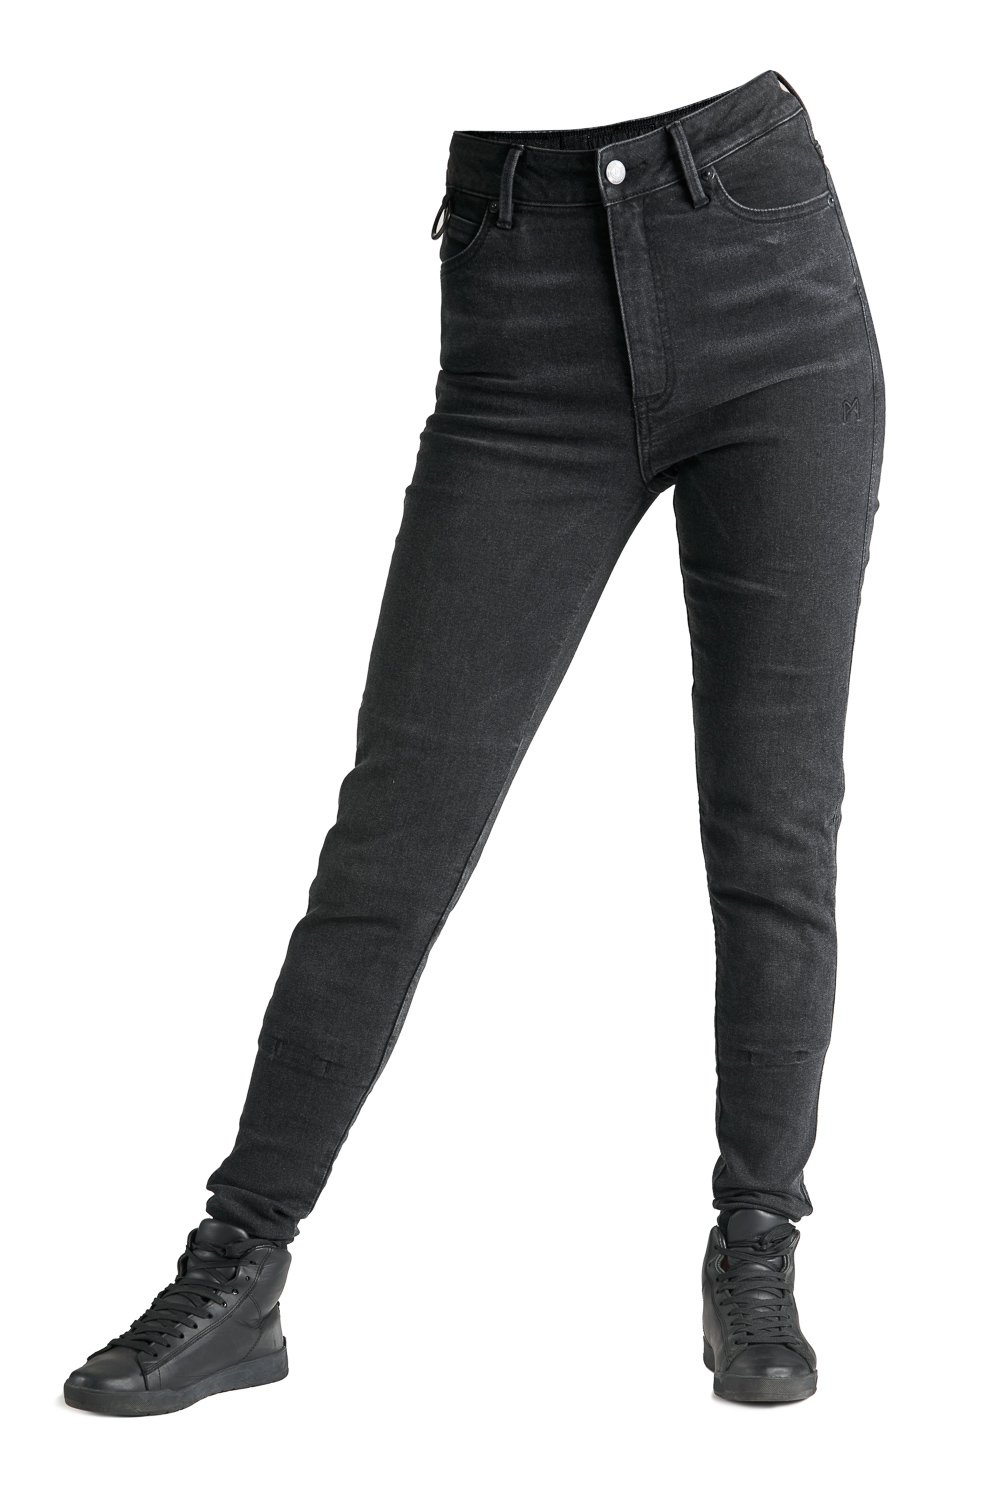 Image of Pando Moto Kusari Cor 01 Women Motorcycle Jeans Skinny-Fit Cordura Size W28/L34 EN